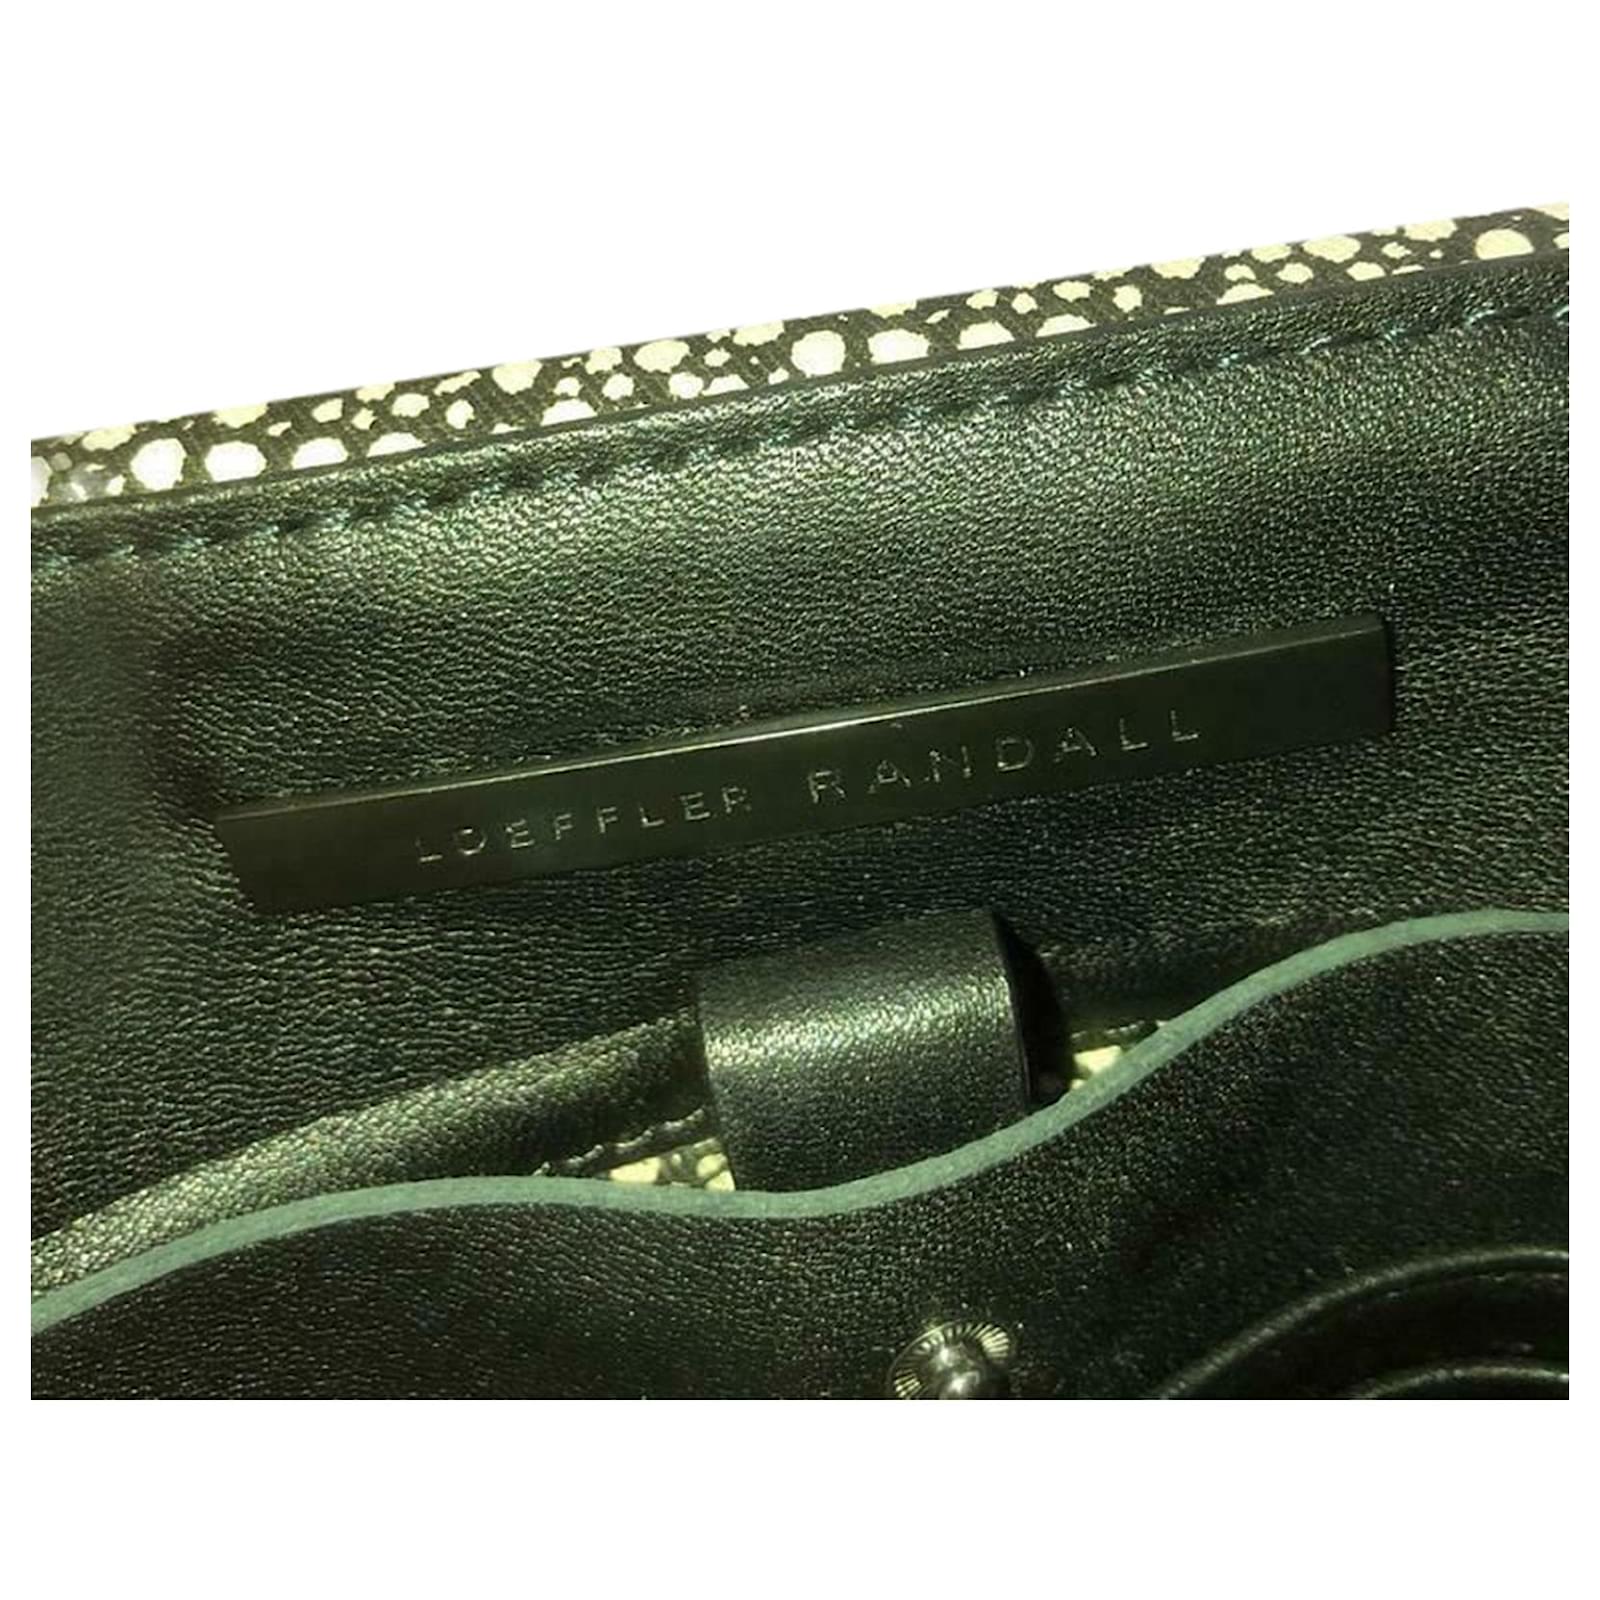 Loeffler Randall Rider Studs Cream and Black Leather/ Woven Satchel Hand Bag